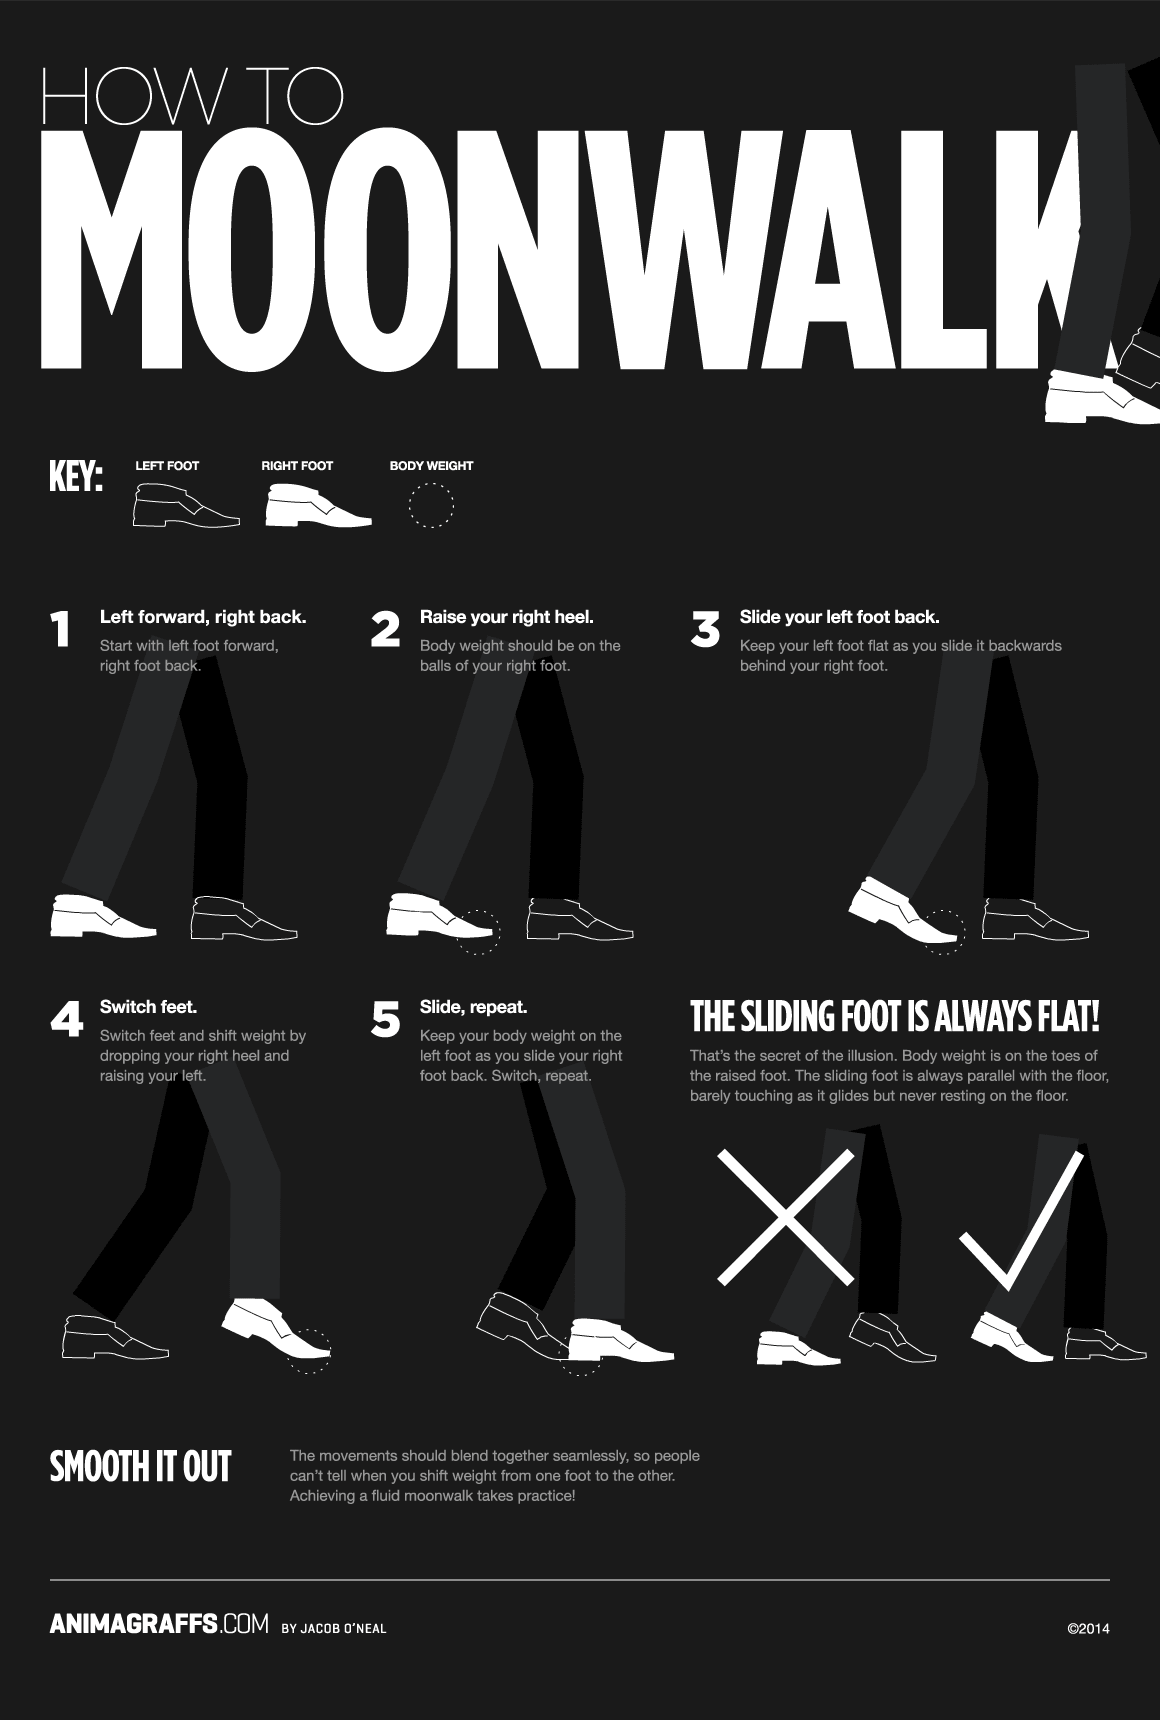 How to moonwalk!